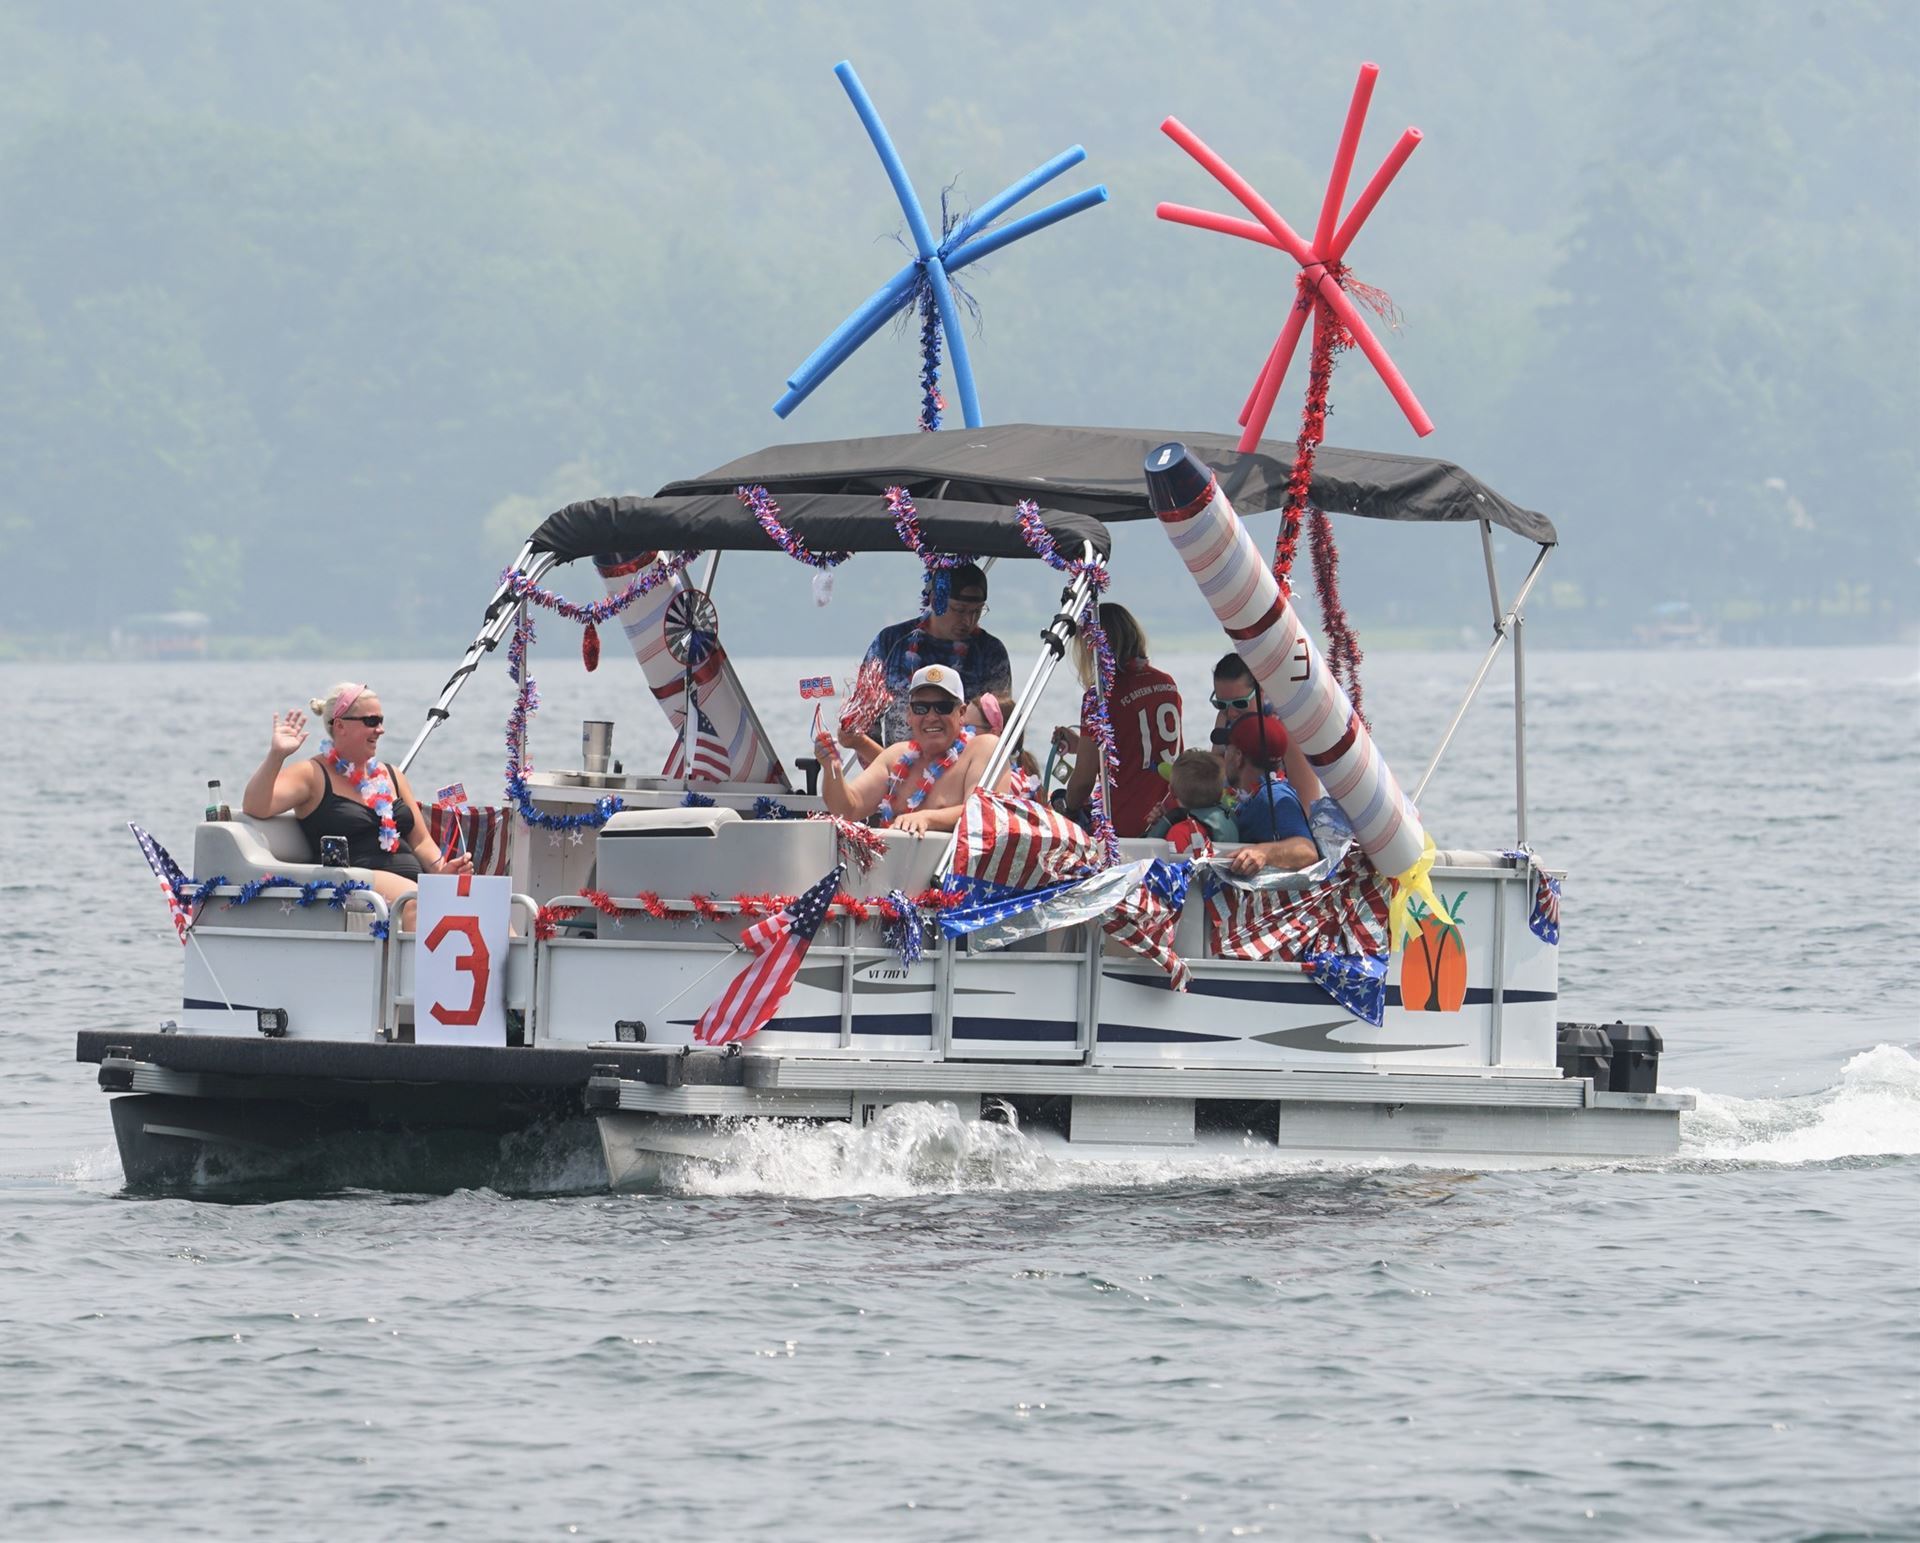 Most Patriotic: Boat #3 - 4th of July / Fireworks - Joseph Cheslawski 